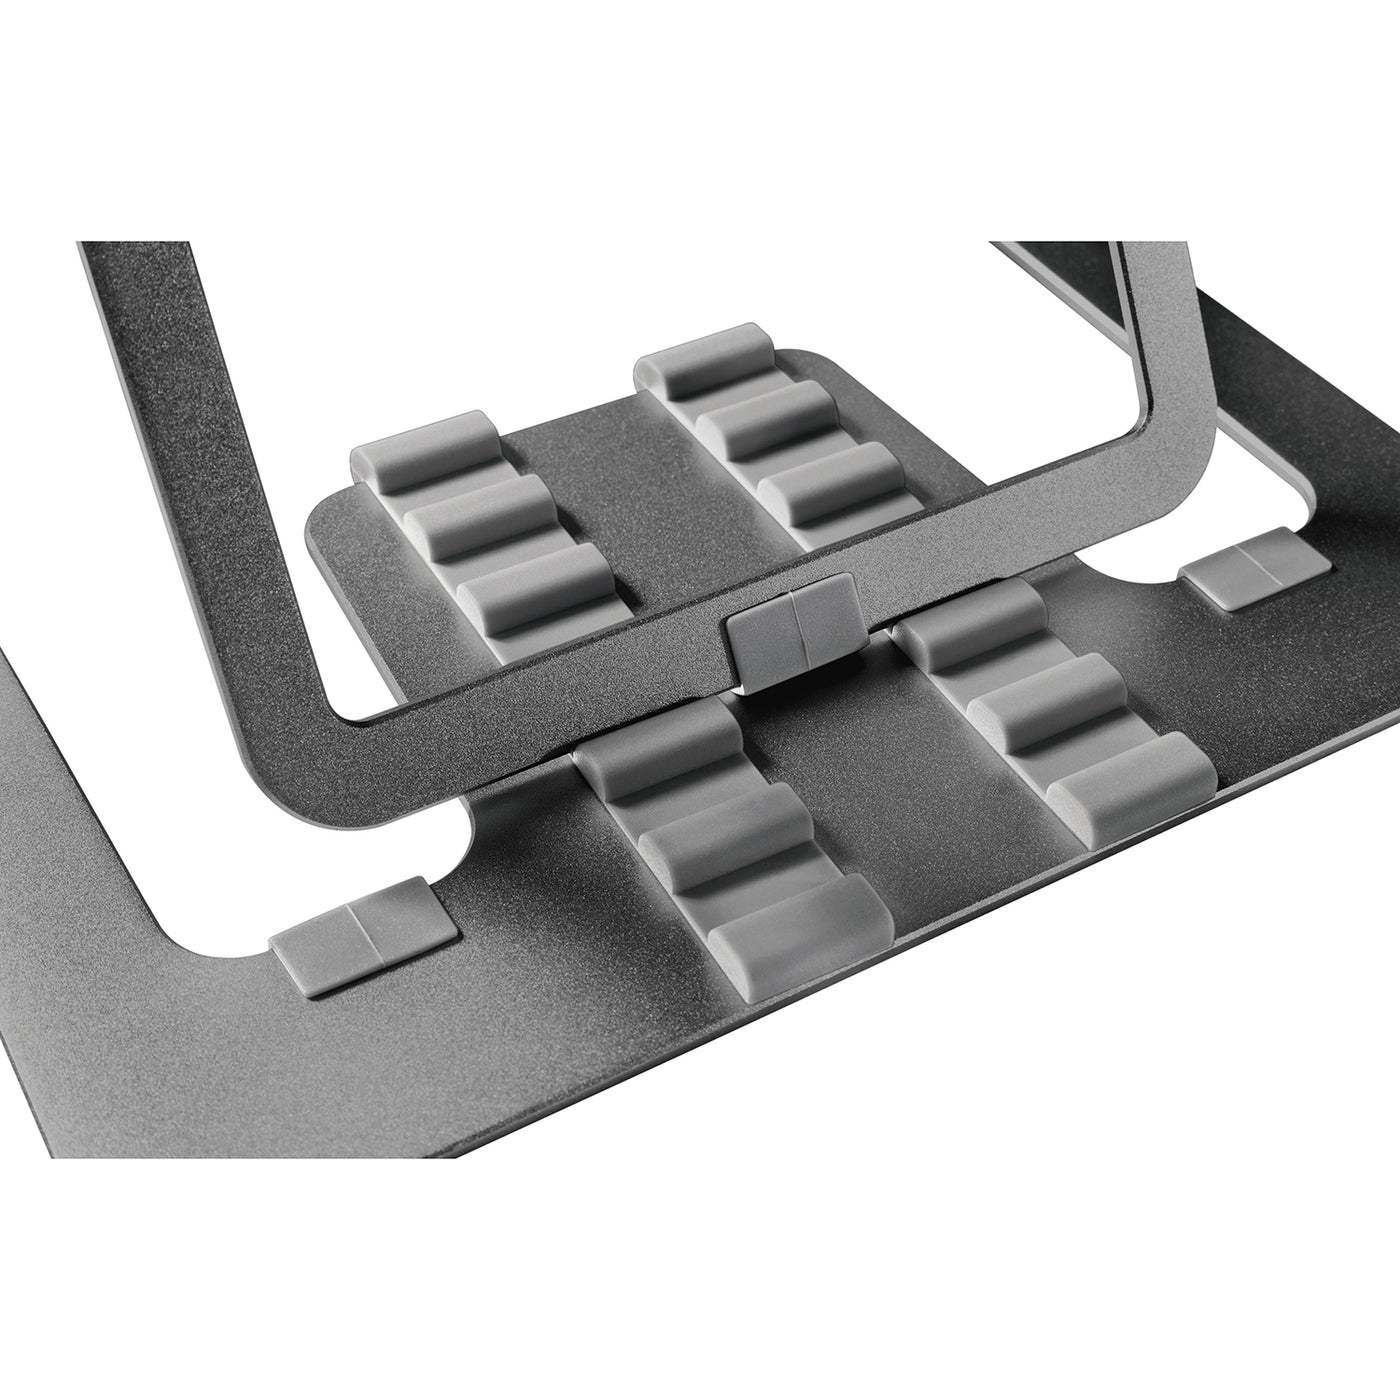 Ultra slim, foldable aluminum laptop stand ERGOOFFICE.EU, gray, suitable for 11-15'' laptops, ER-416 G